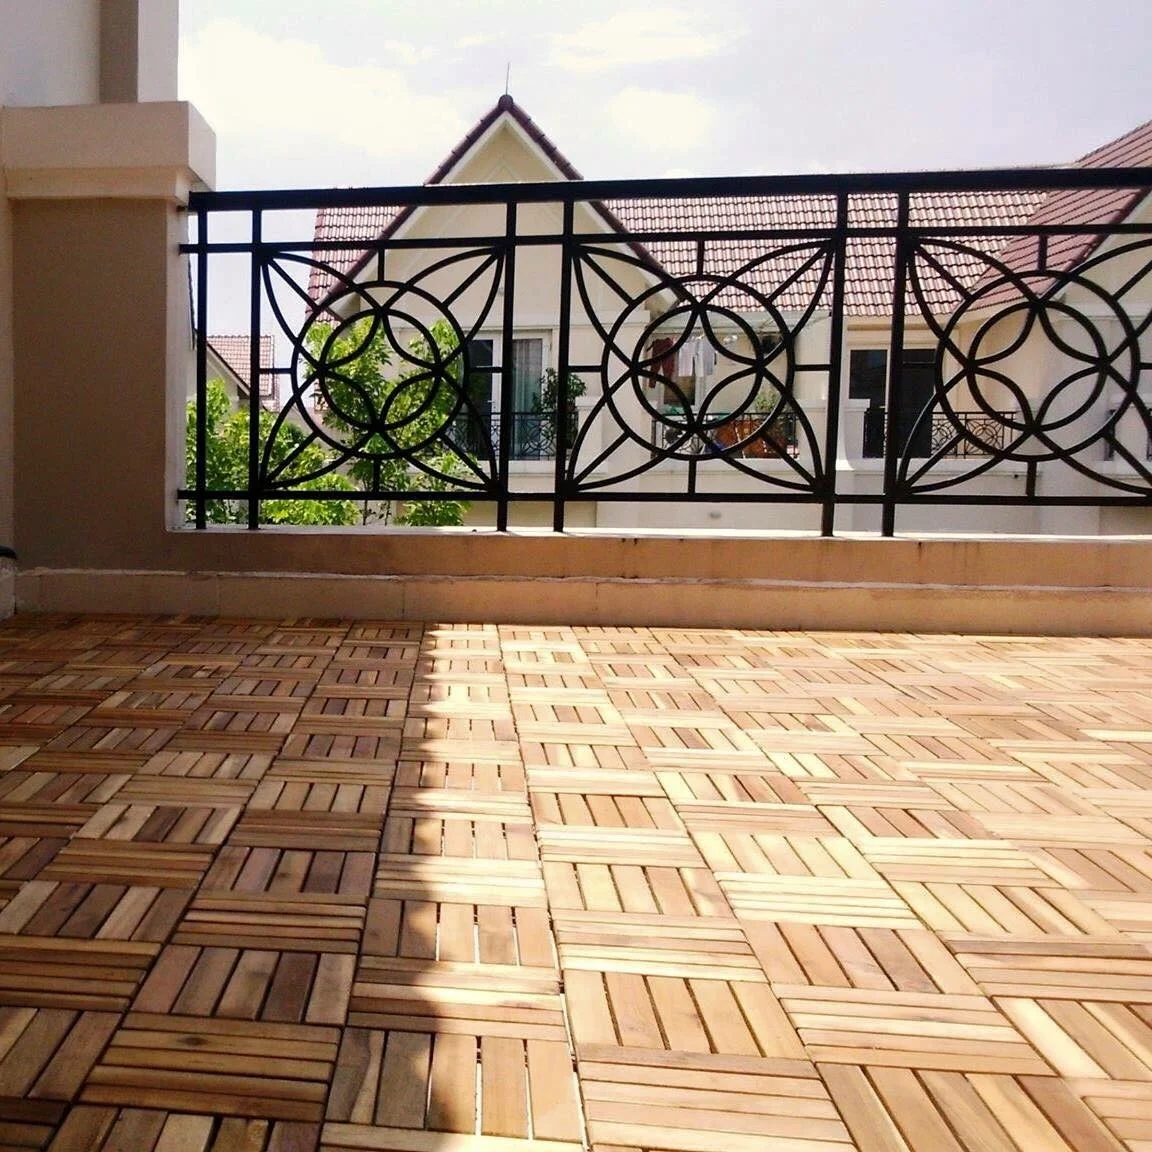 
Acacia Wood Interlocking Deck Tiles, Plastic wood composite interlock deck tile or Plastic Decking Flooring Tiles B5985 